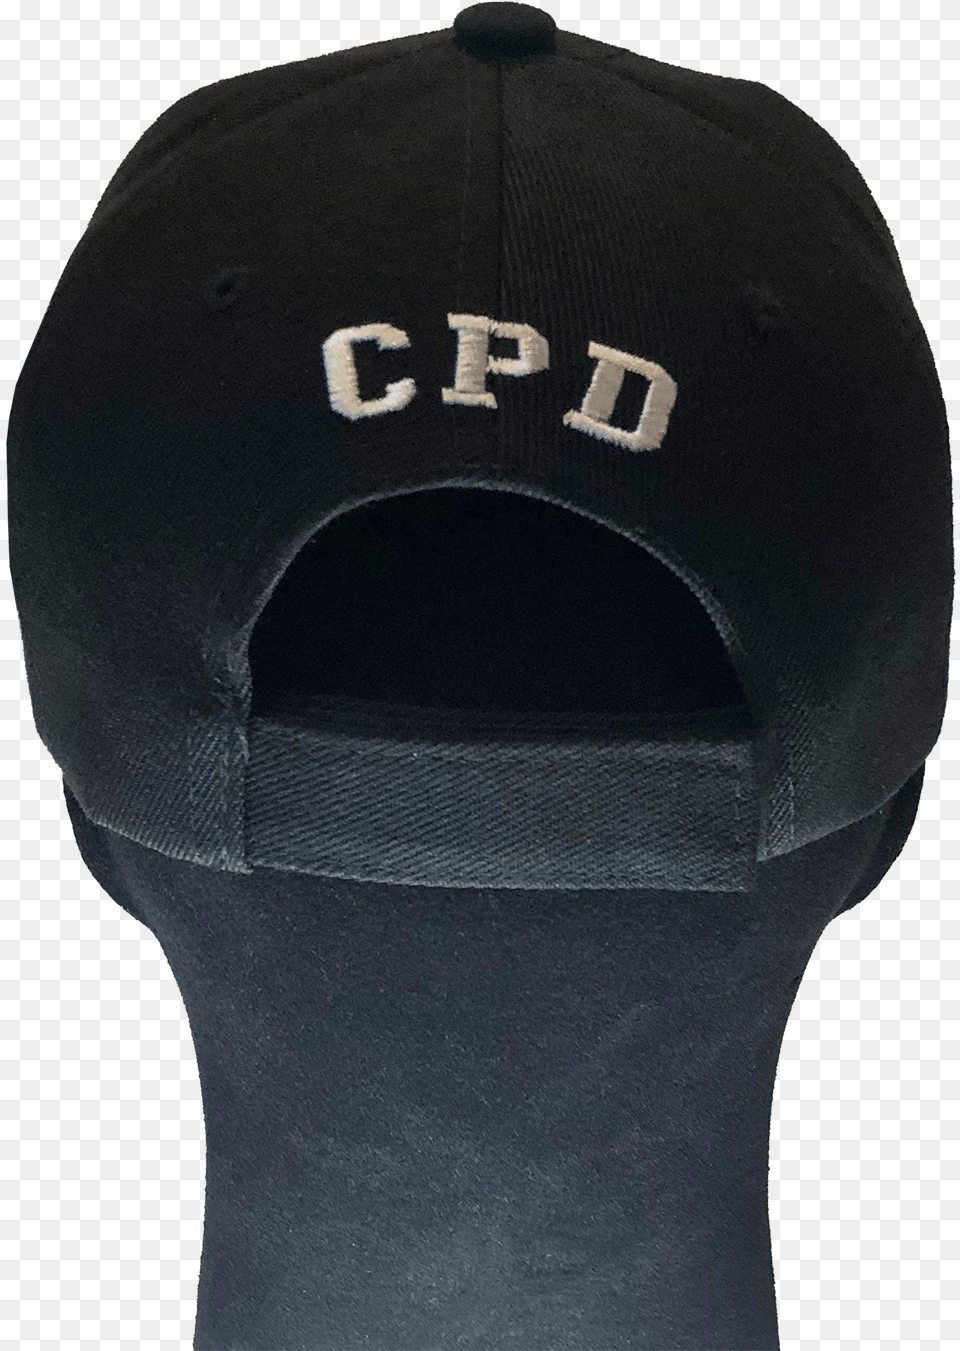 Hd Cop Hat For Baseball, Baseball Cap, Cap, Clothing, Adult Png Image